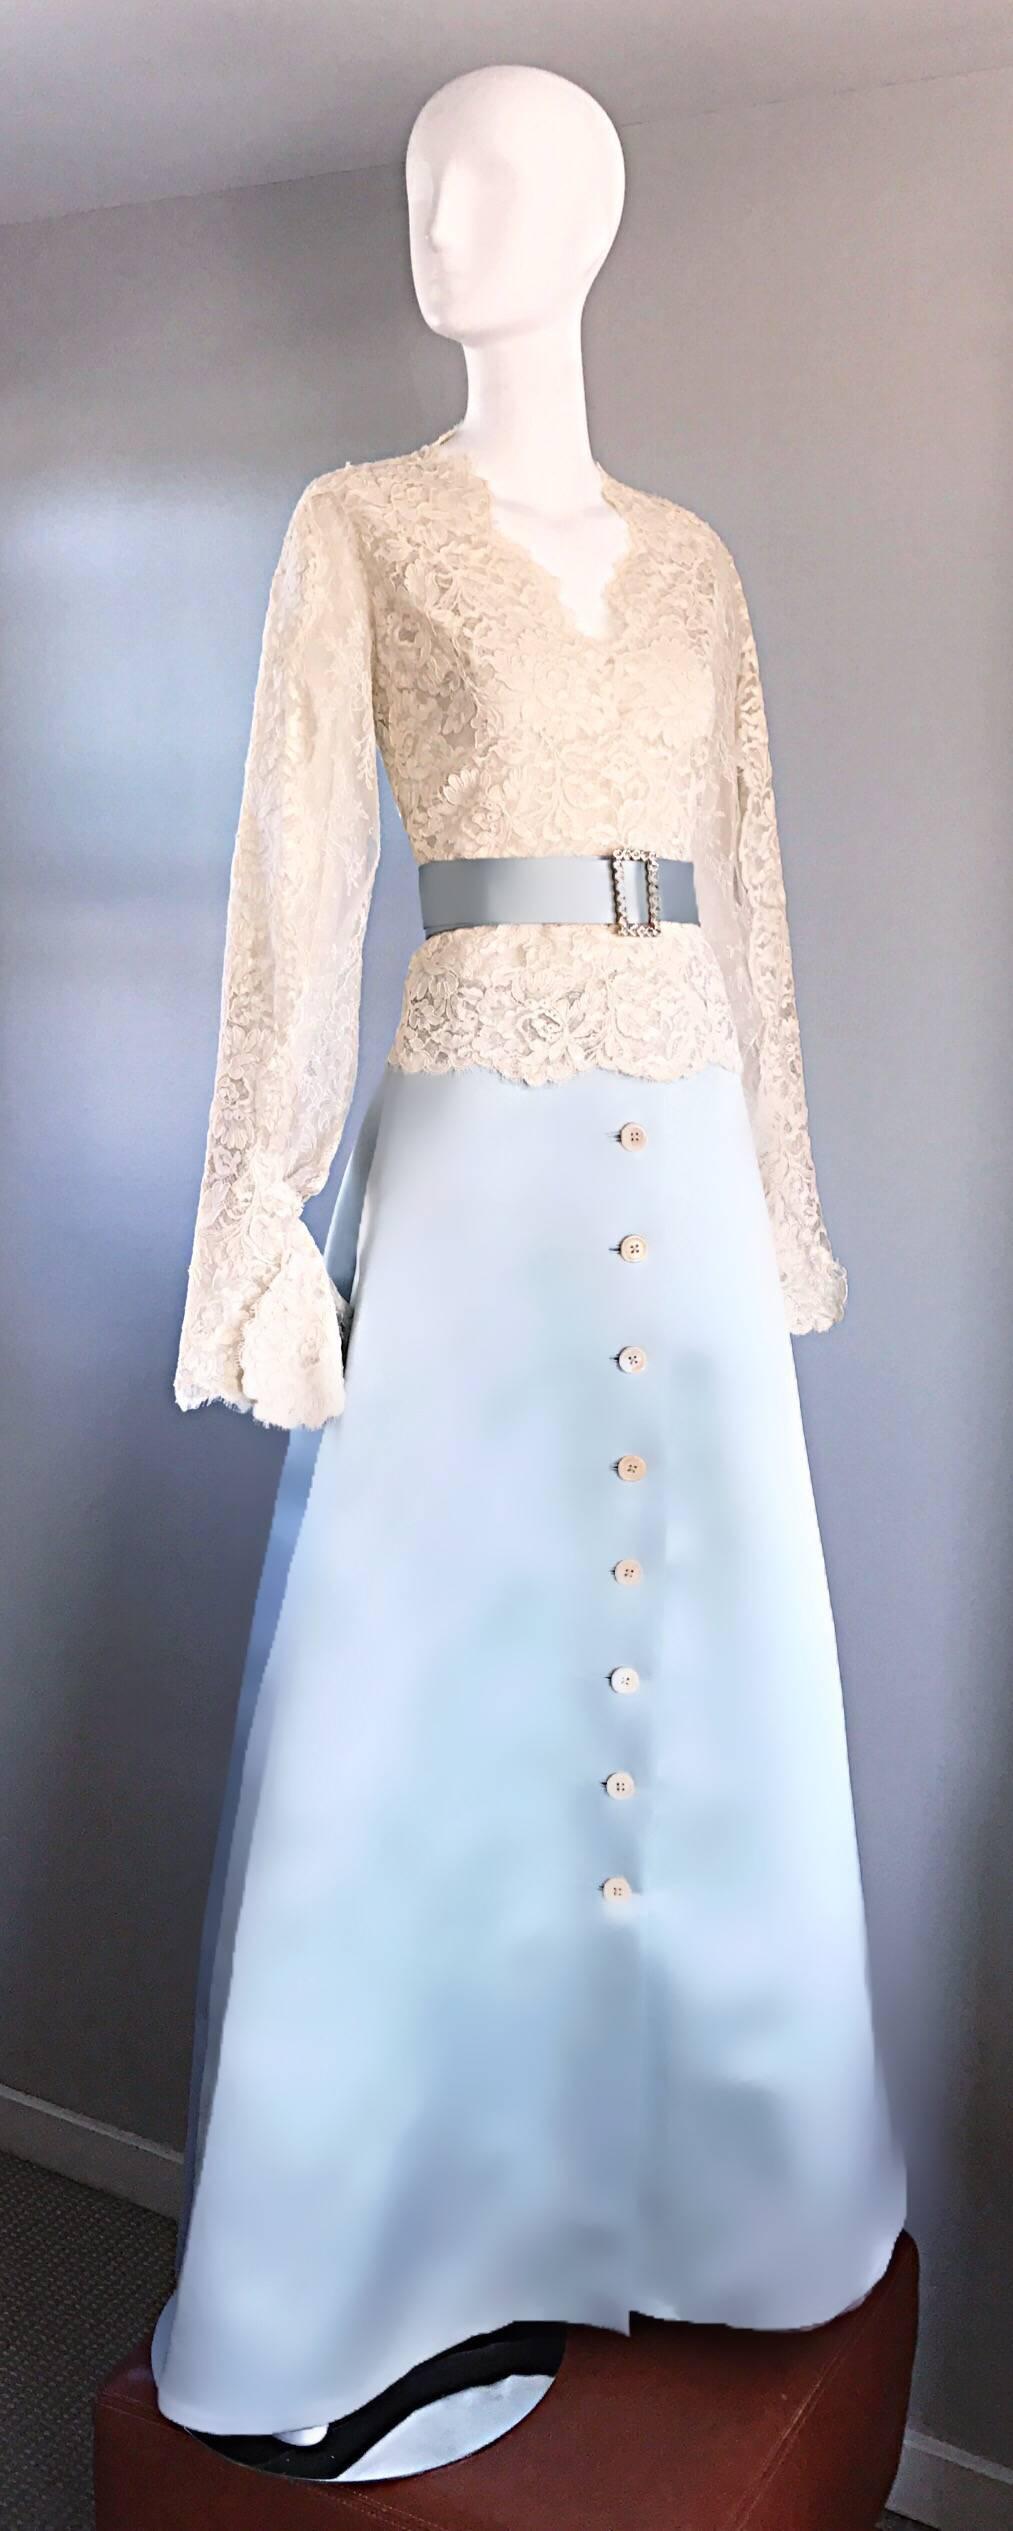 Women's Exquisite Vintage Bill Blass 1970s Baby Blue + White Lace 3 Piece Evening Gown